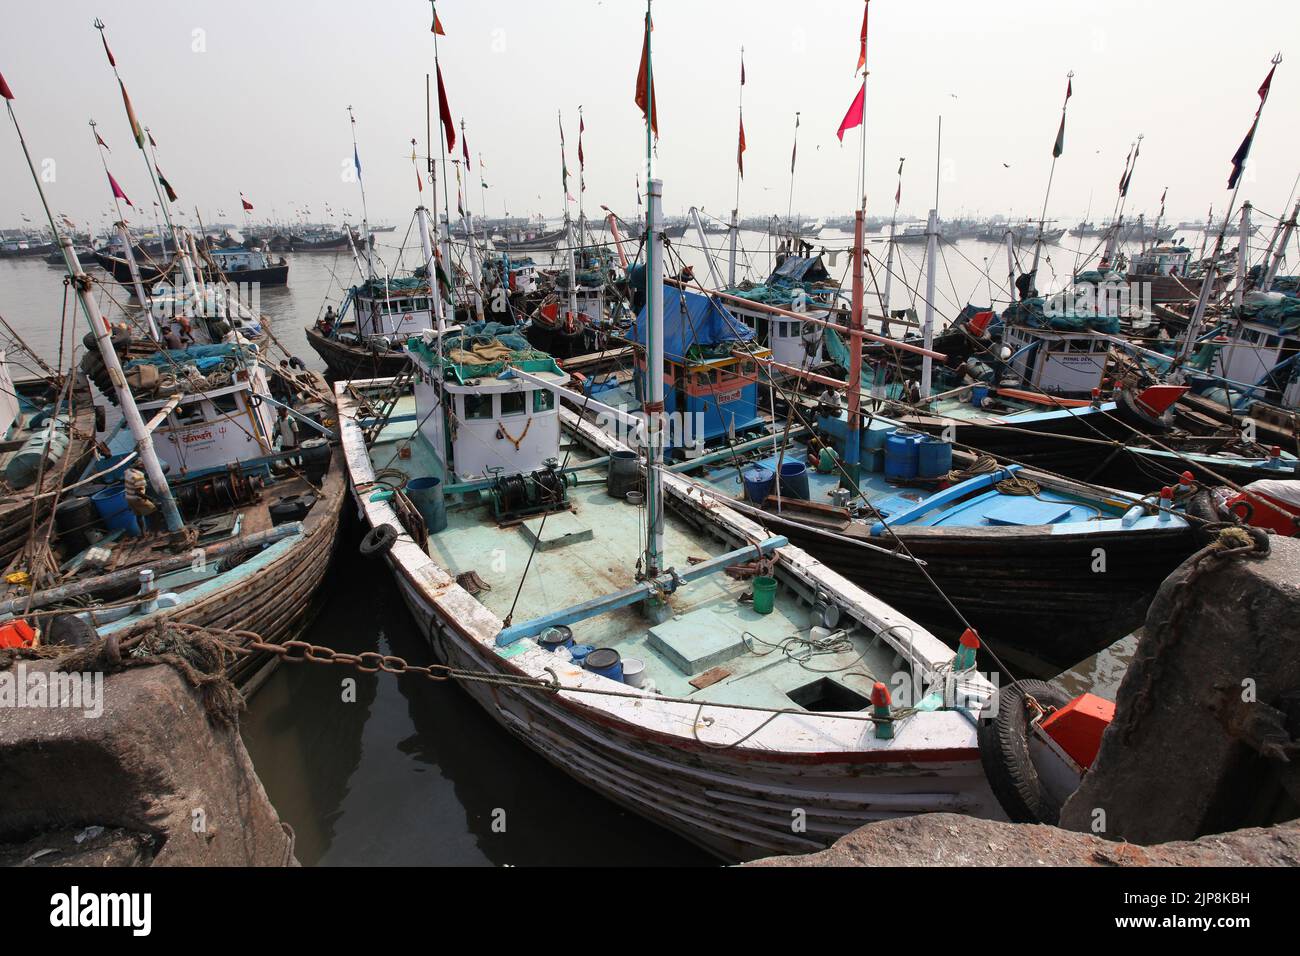 Barche da pesca, Ferry Wharf, Bhaucha Dhakka, Mazgaon, Mumbai, India il 2 febbraio 2013 Foto Stock